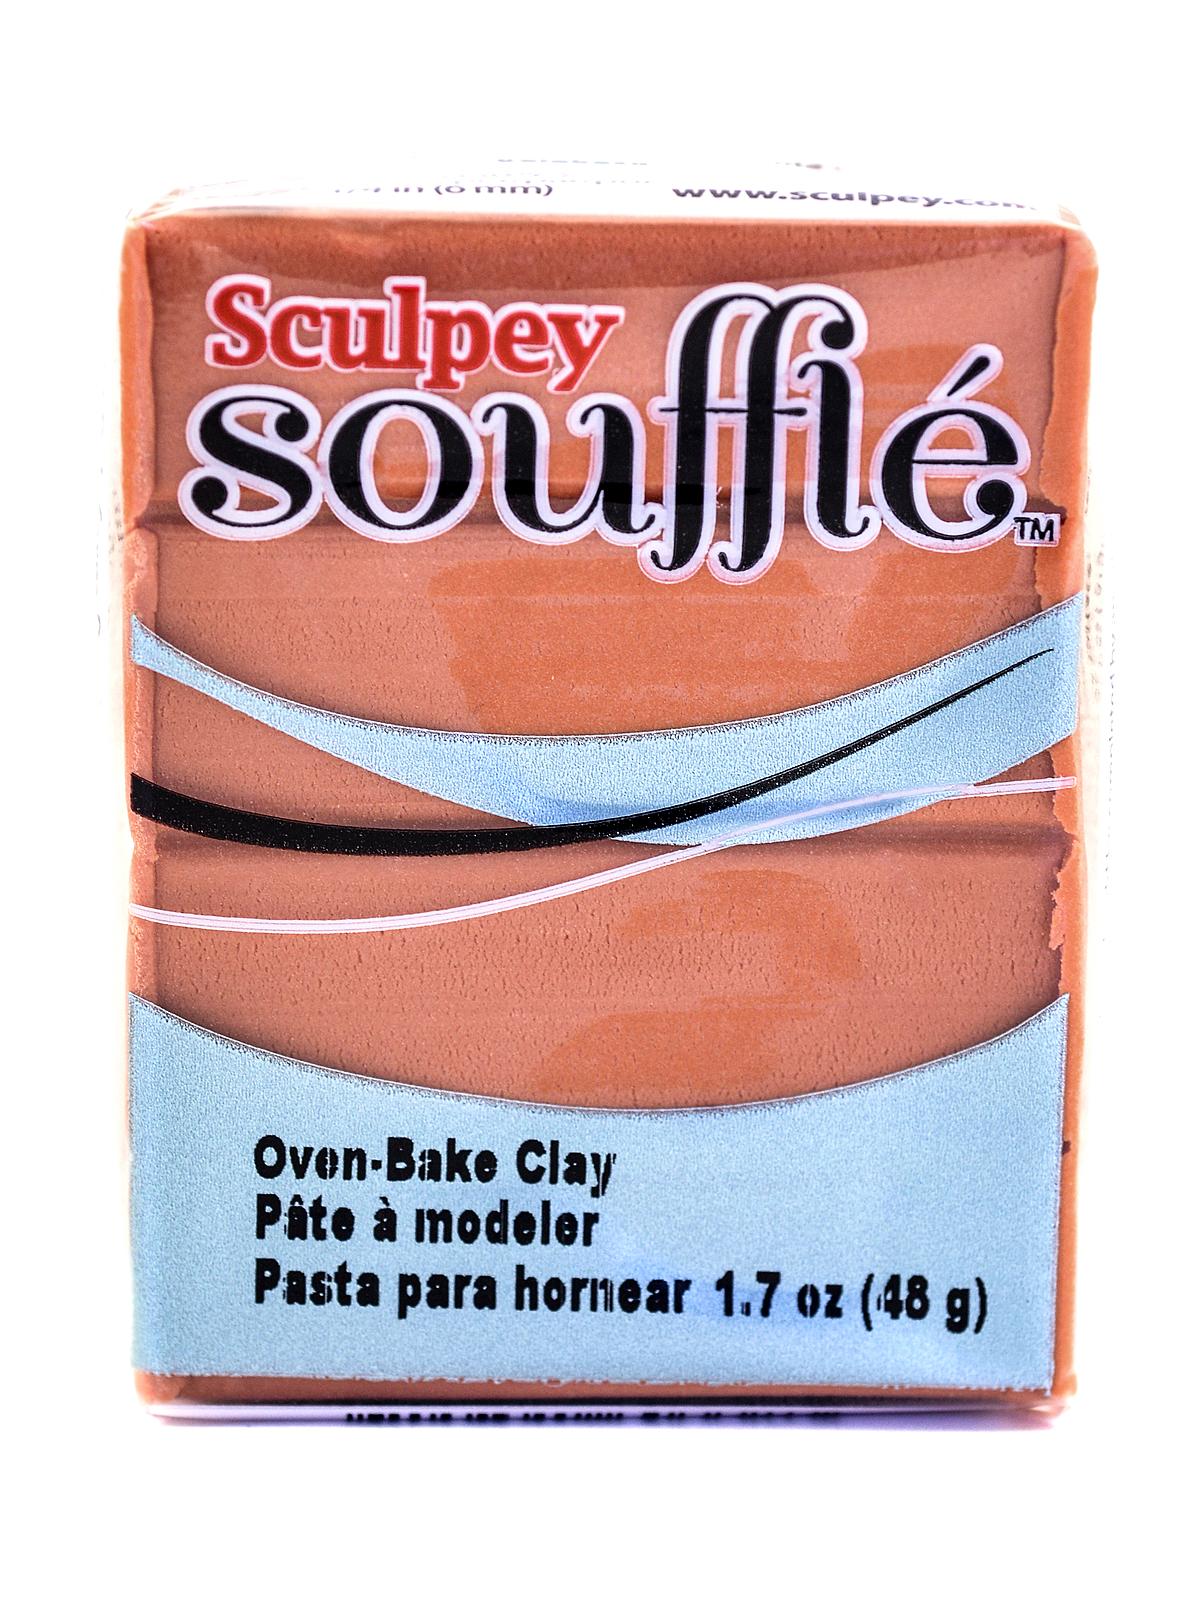 Soufflé Oven-bake Clay Pumpkin 1.7 Oz.